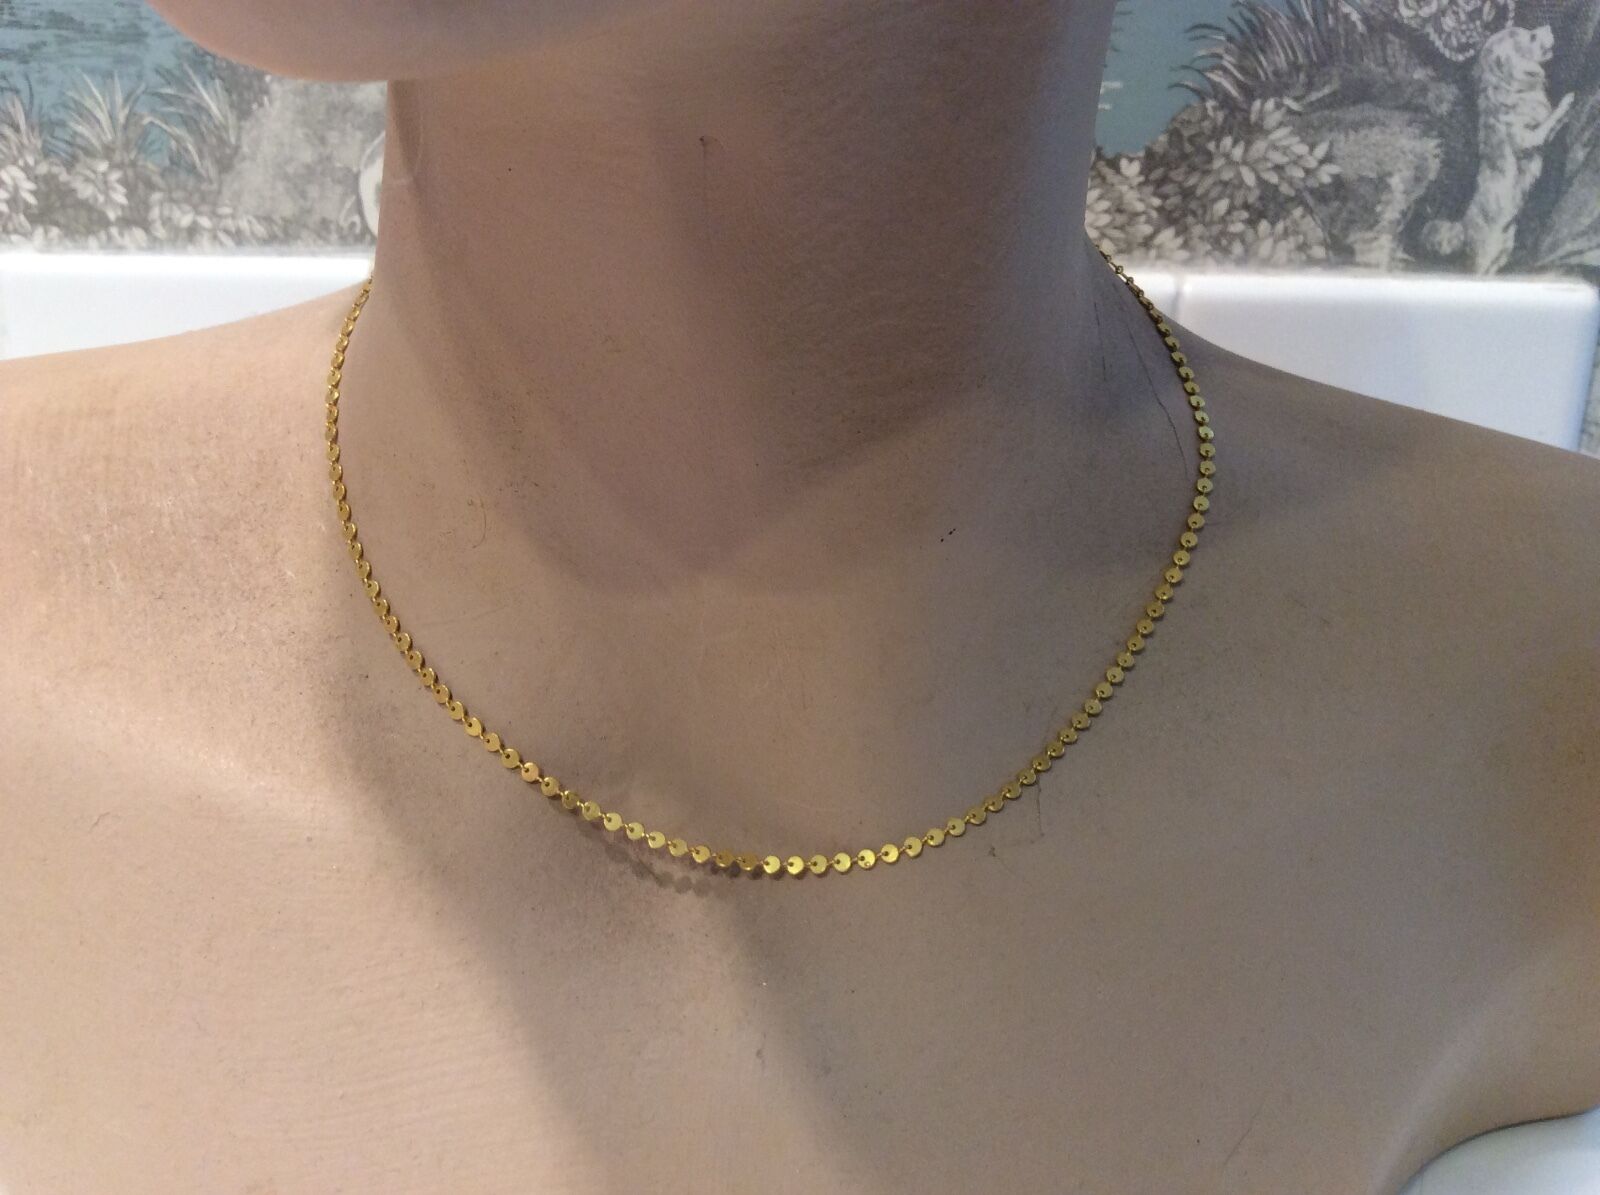 Marie Helene De Taillac 22k Gold Sequin Necklace | eBay